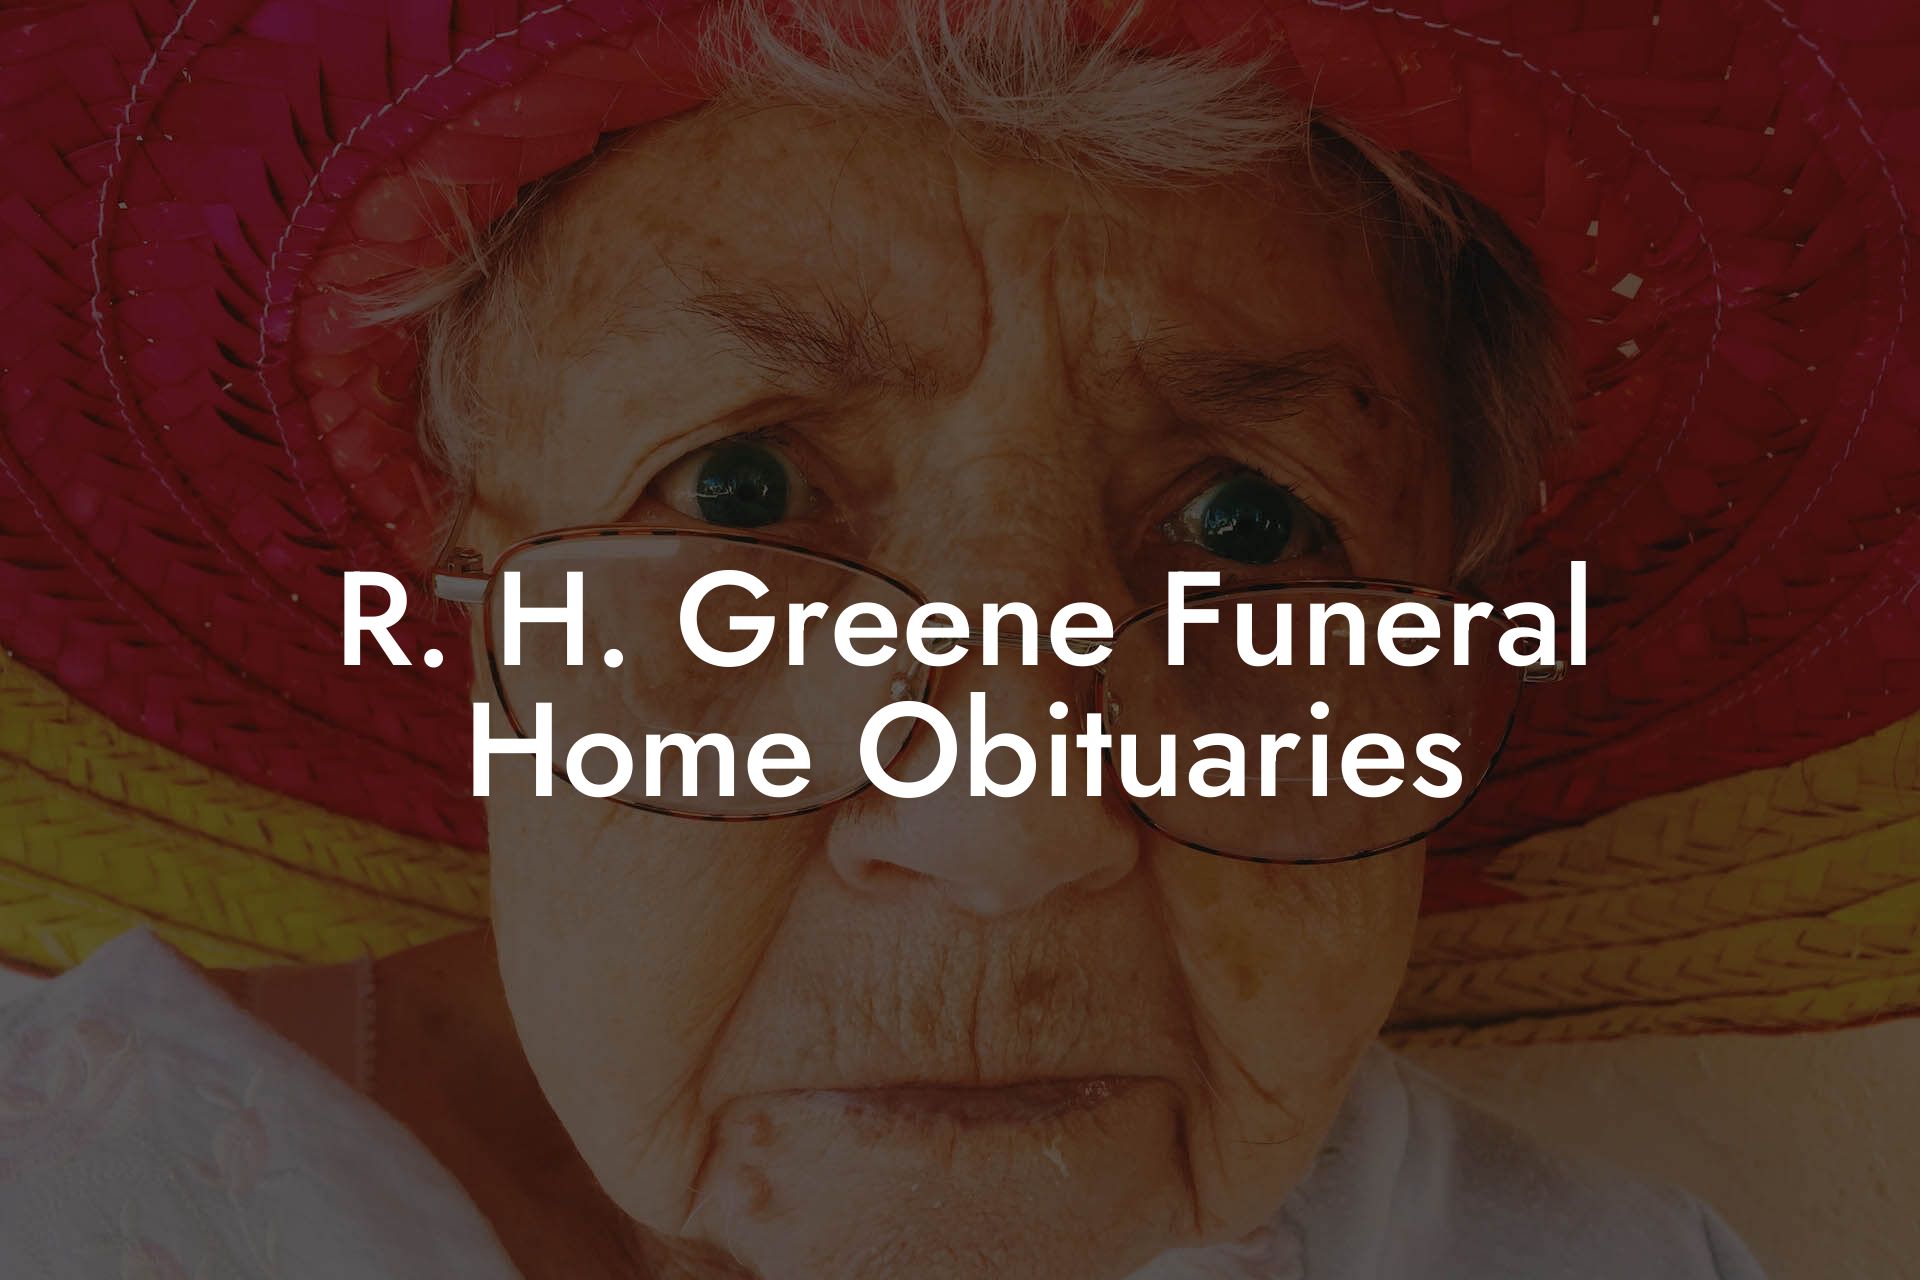 R. H. Greene Funeral Home Obituaries